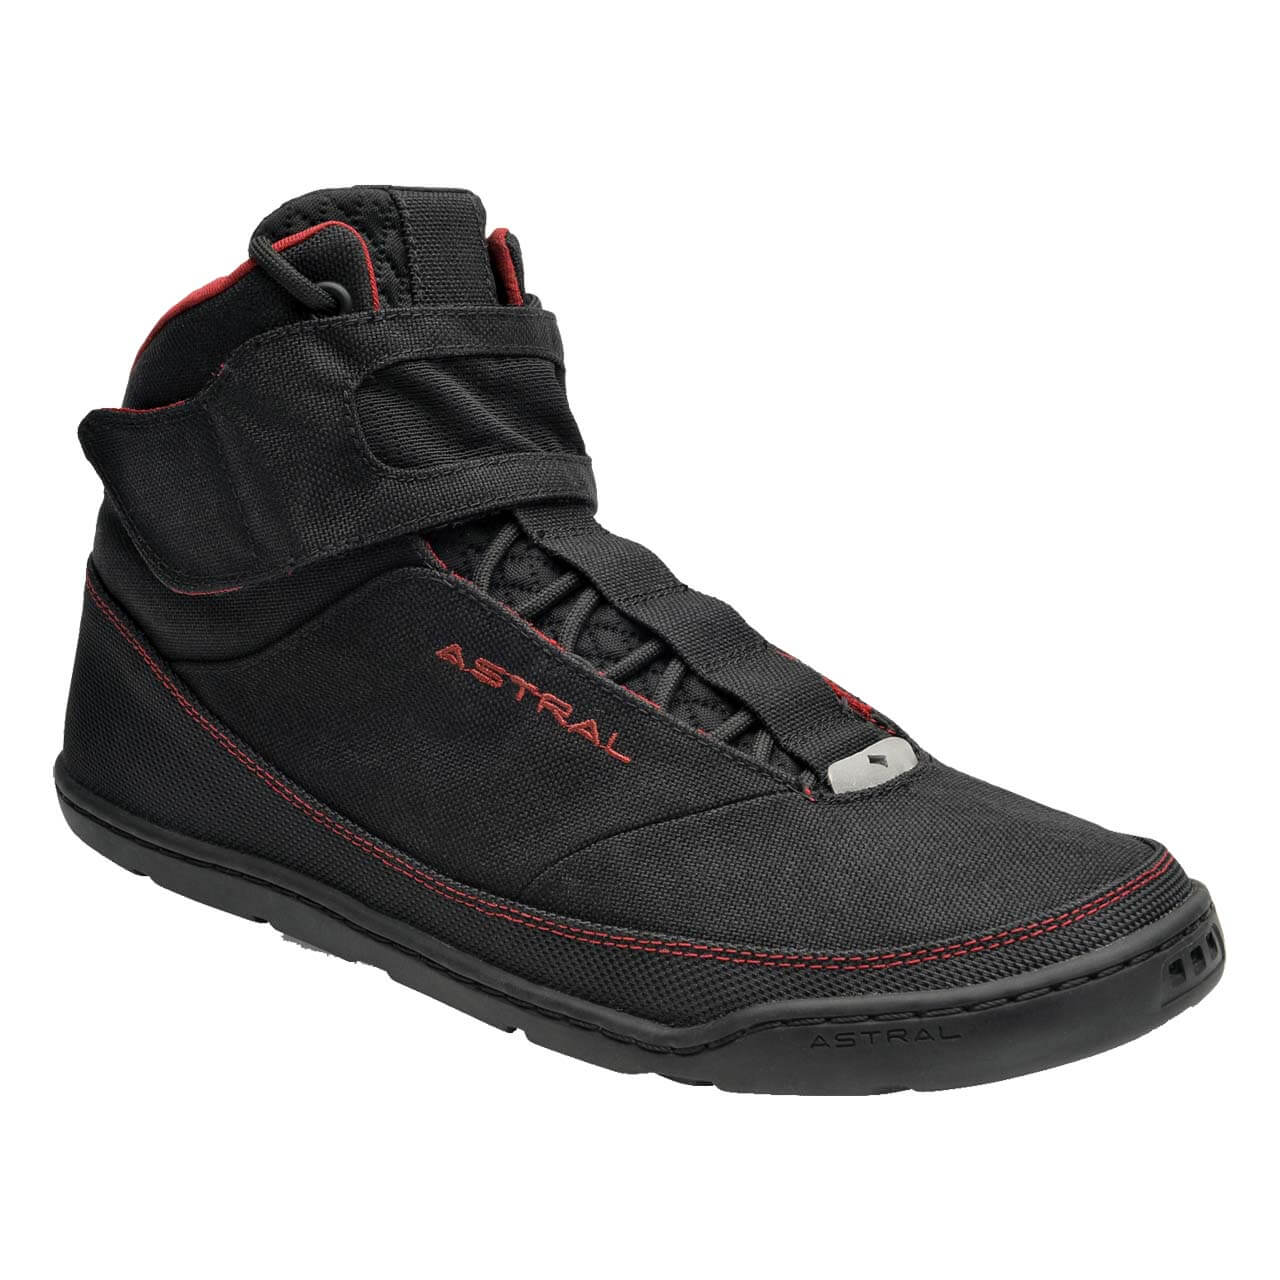 Astral Hiyak Kajak Boots - Black, US 10 / EU 44